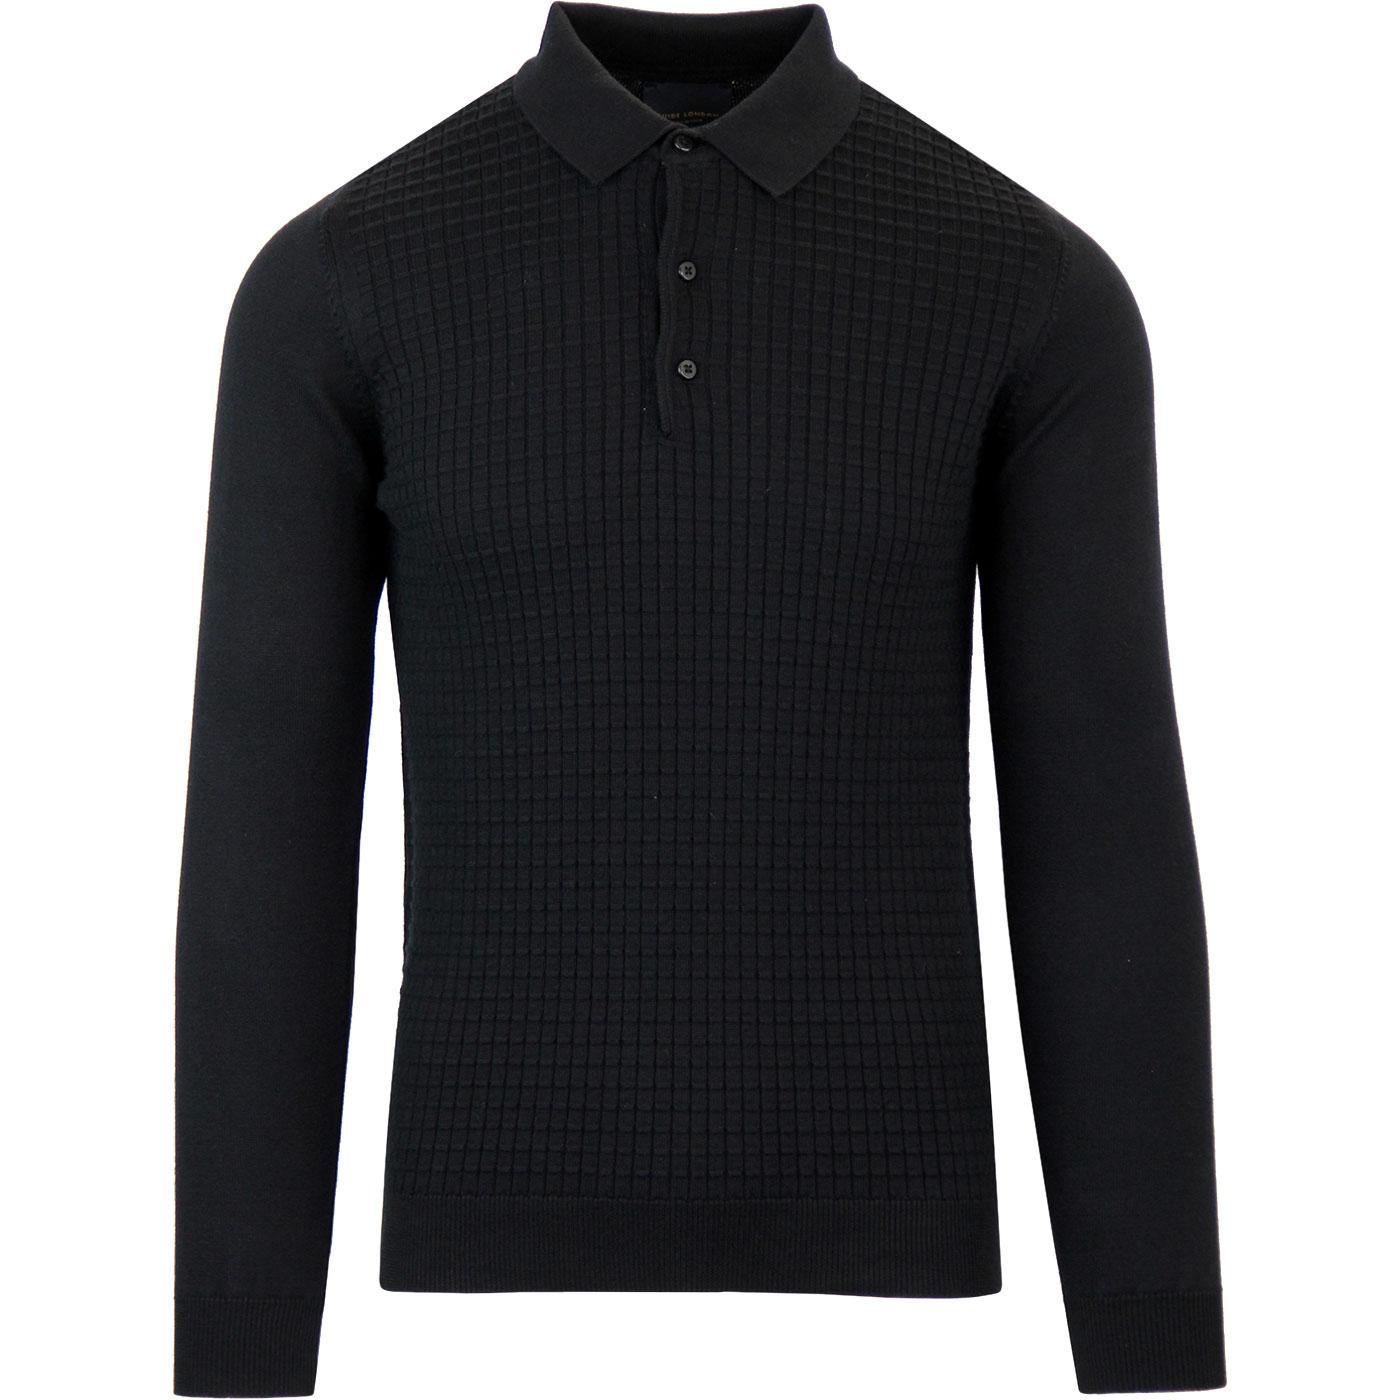 GUIDE LONDON Men's 1960s Mod Waffle Knit Polo Shirt Black